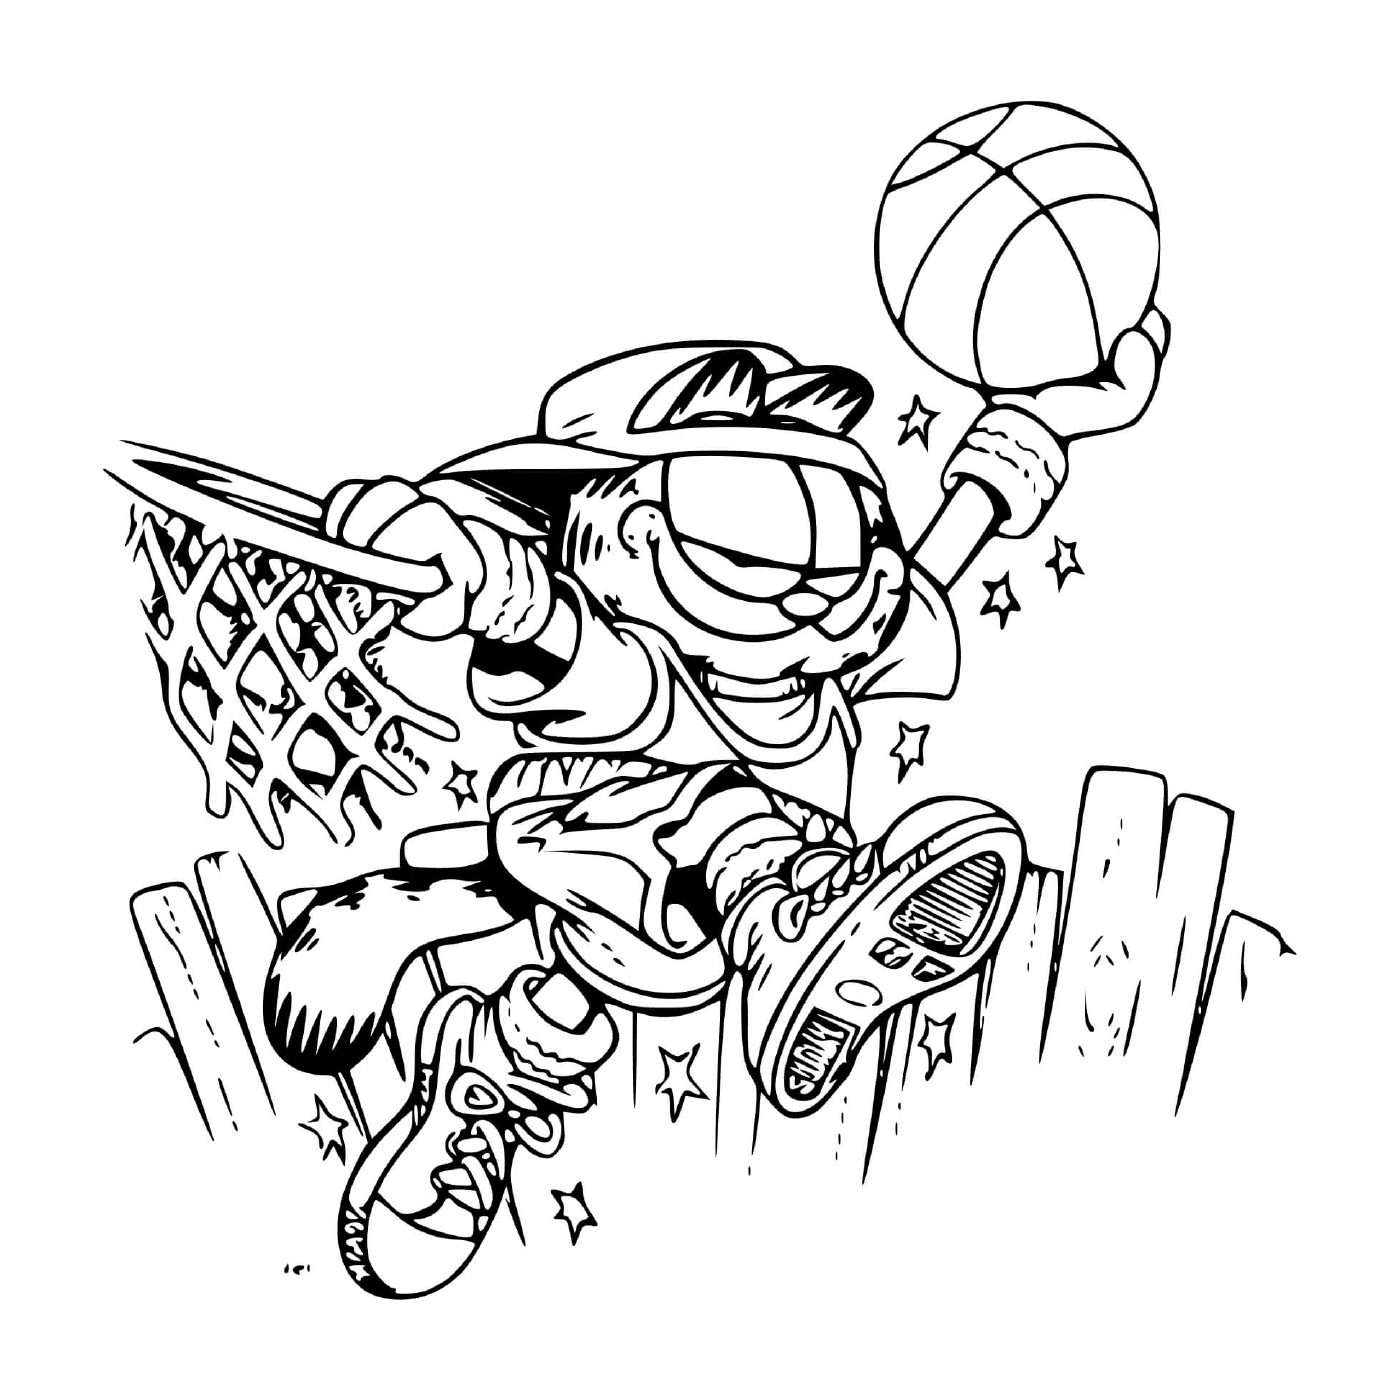  Garfield plays basketball 